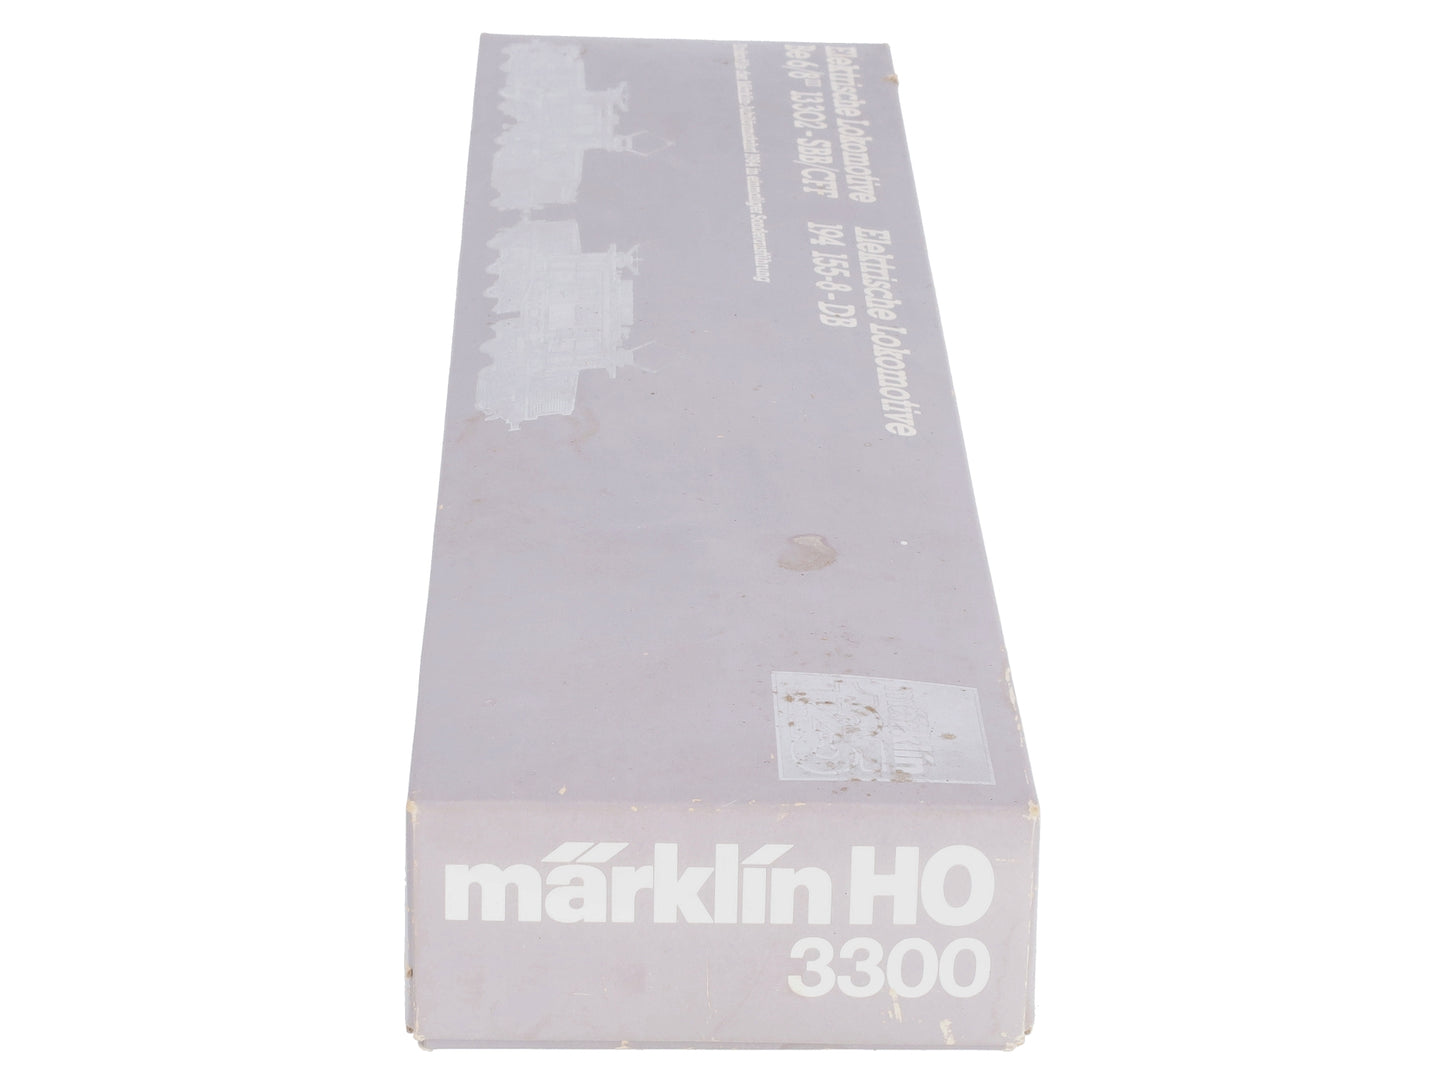 Marklin 3300 HO Scale Crocodile 2-Engine Set EX/Box